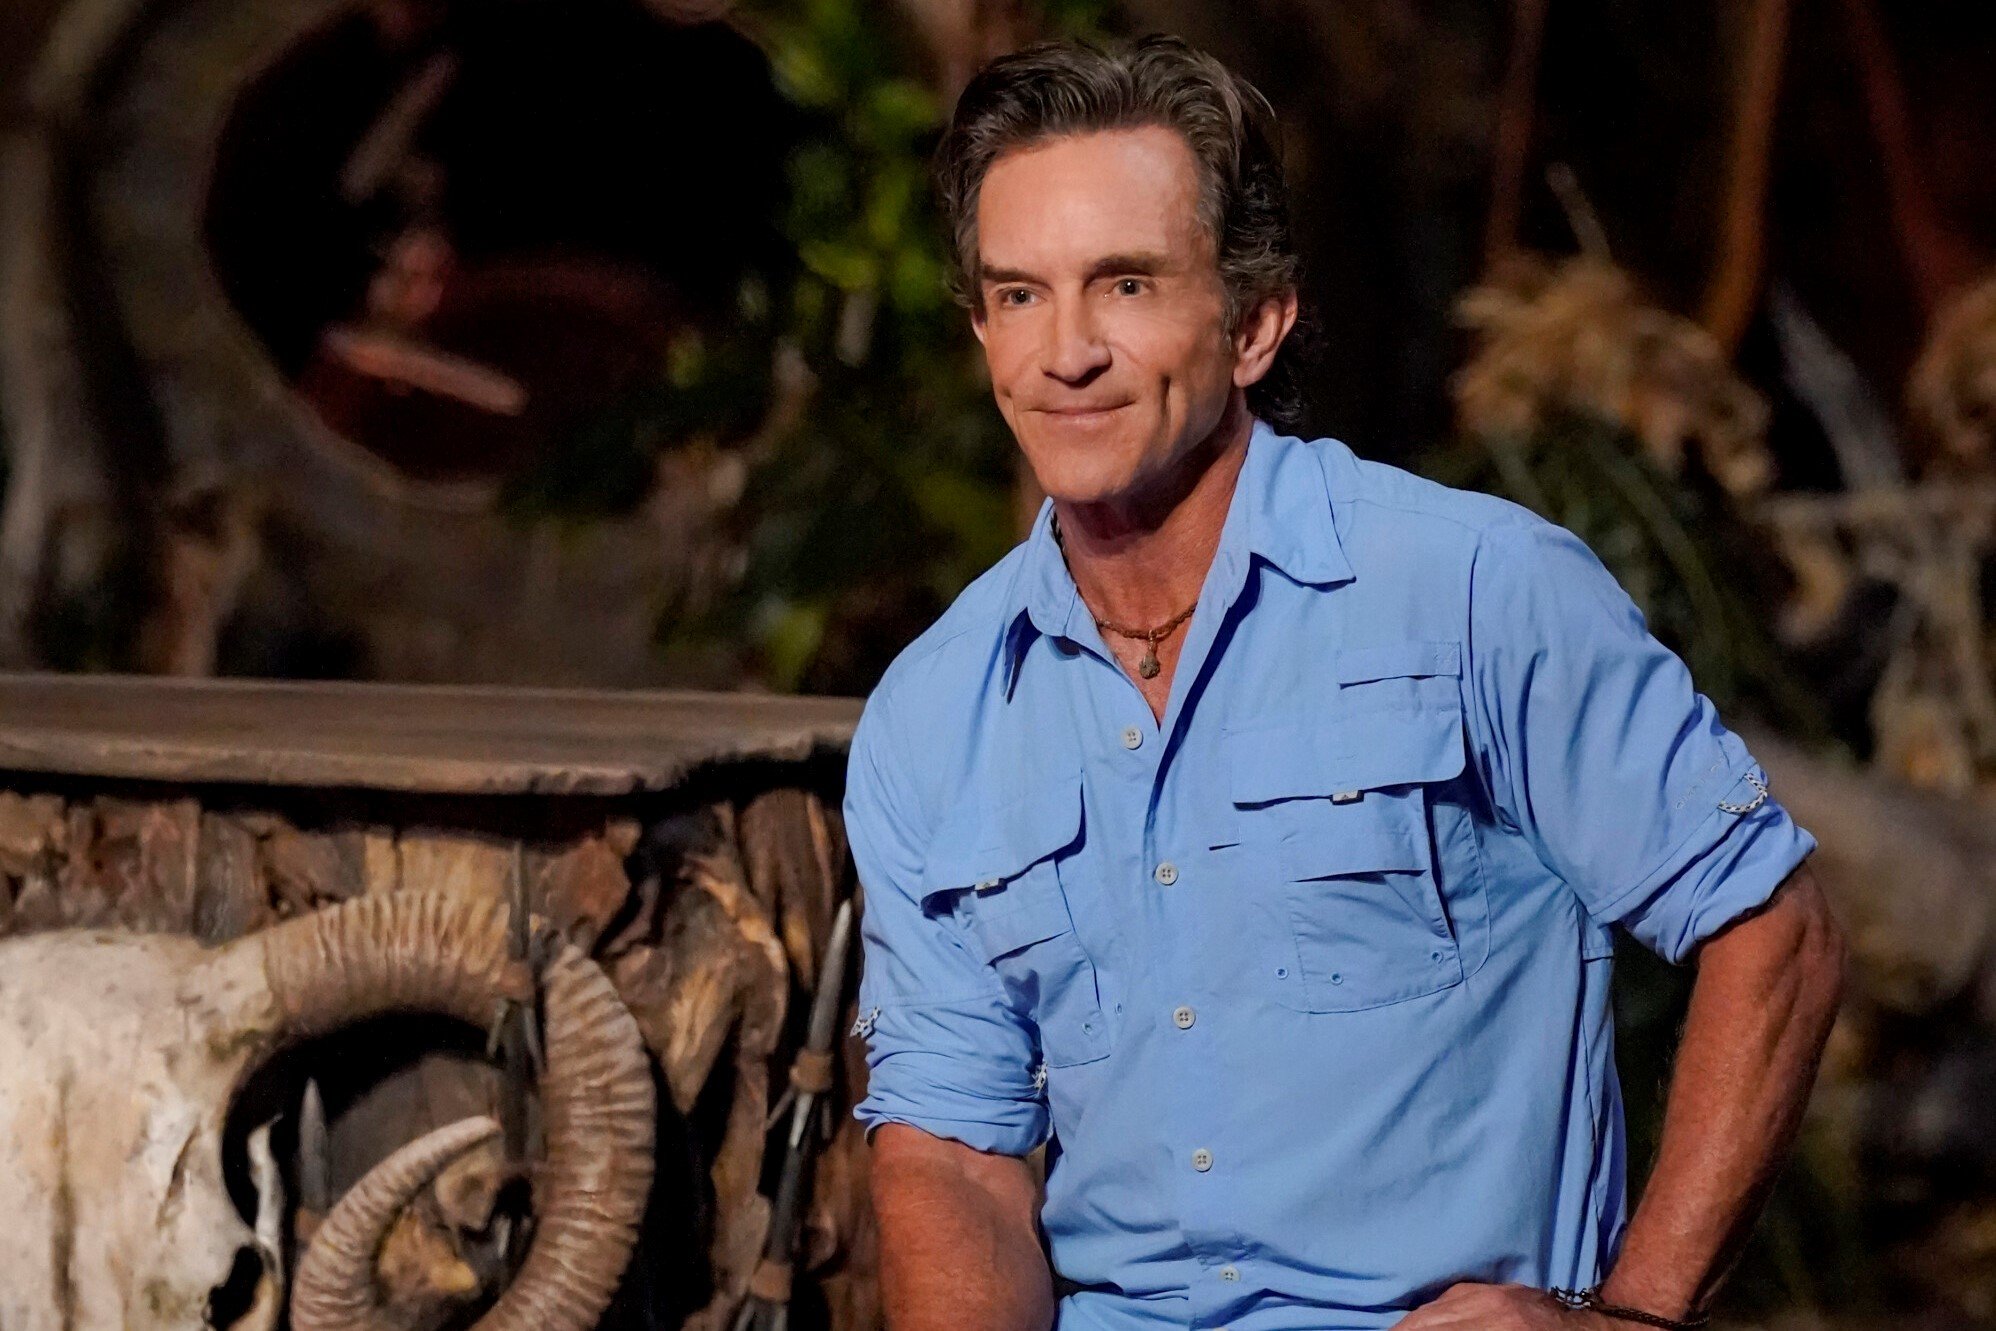 Jeff Probst, the host of 'Survivor' Season 43 on CBS, wears a light blue button-up shirt at Tribal Council.